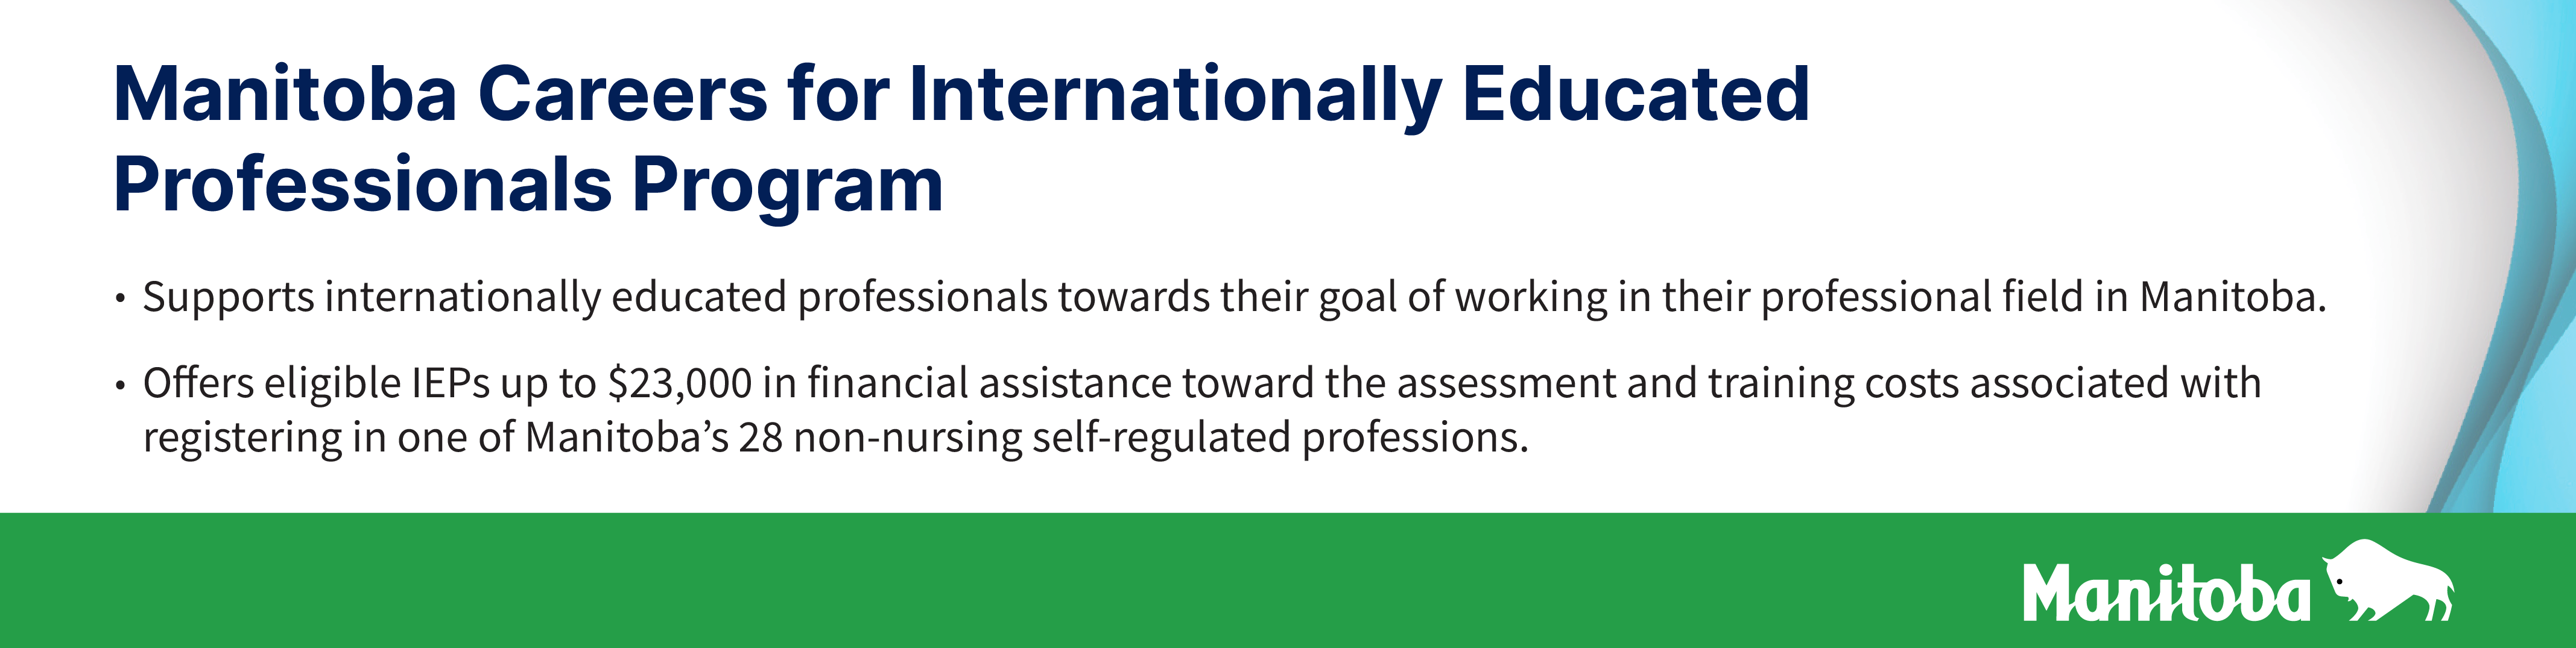 Manitoba Careers for Internationally Educated Professionals Program